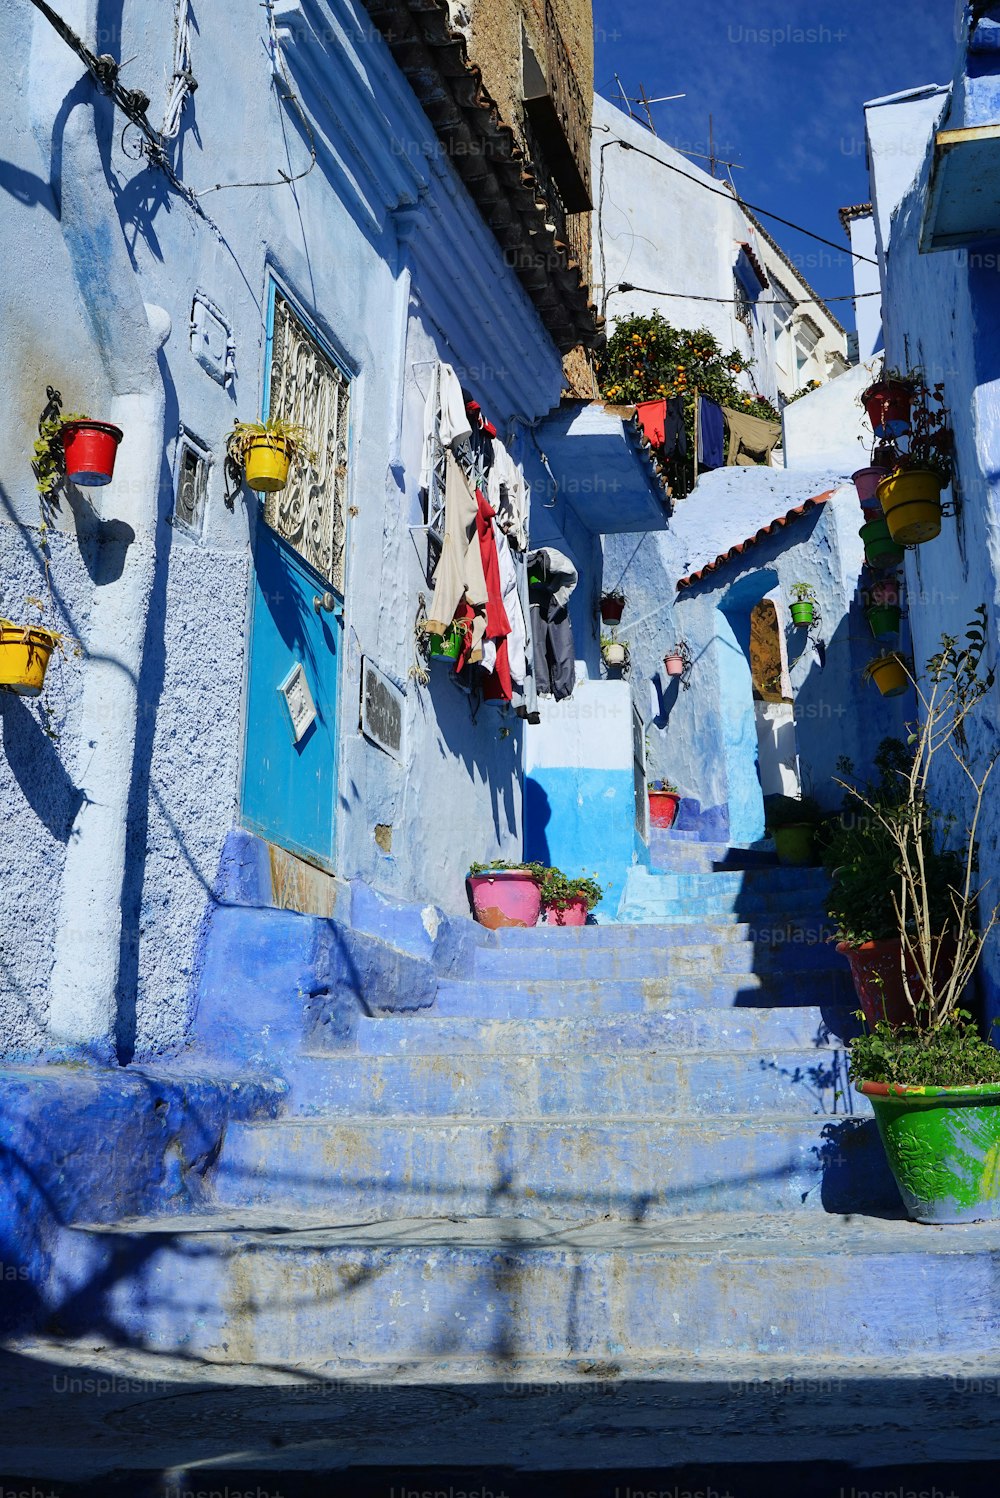 A beautiful shot of a blue street in Chefchaouen, Morroco